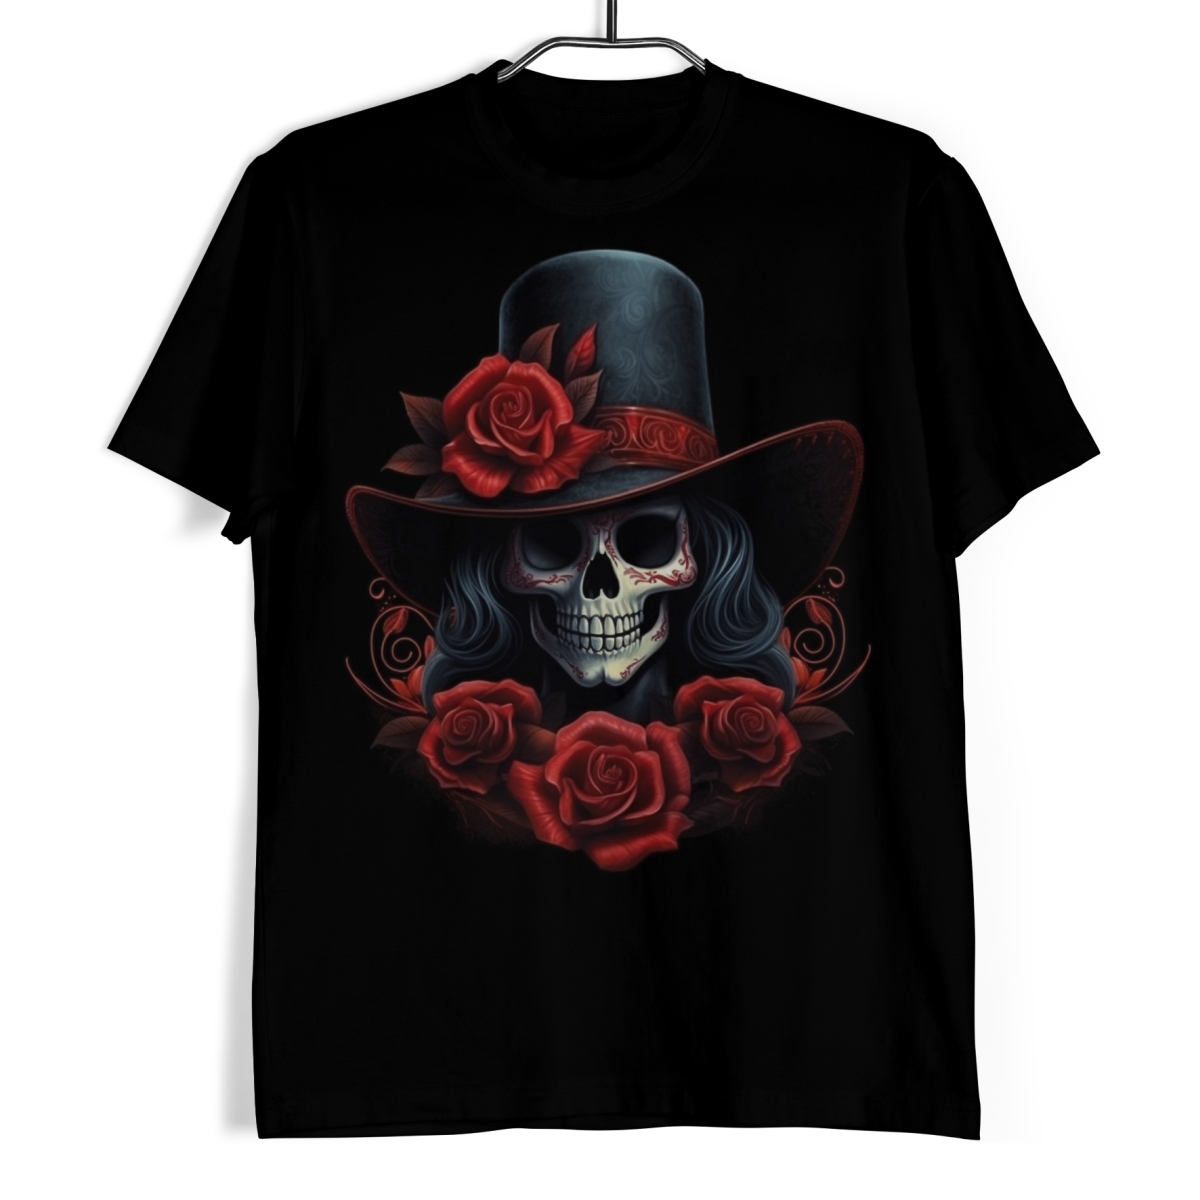 Tričko s lebkou - Dáma s růžemi M